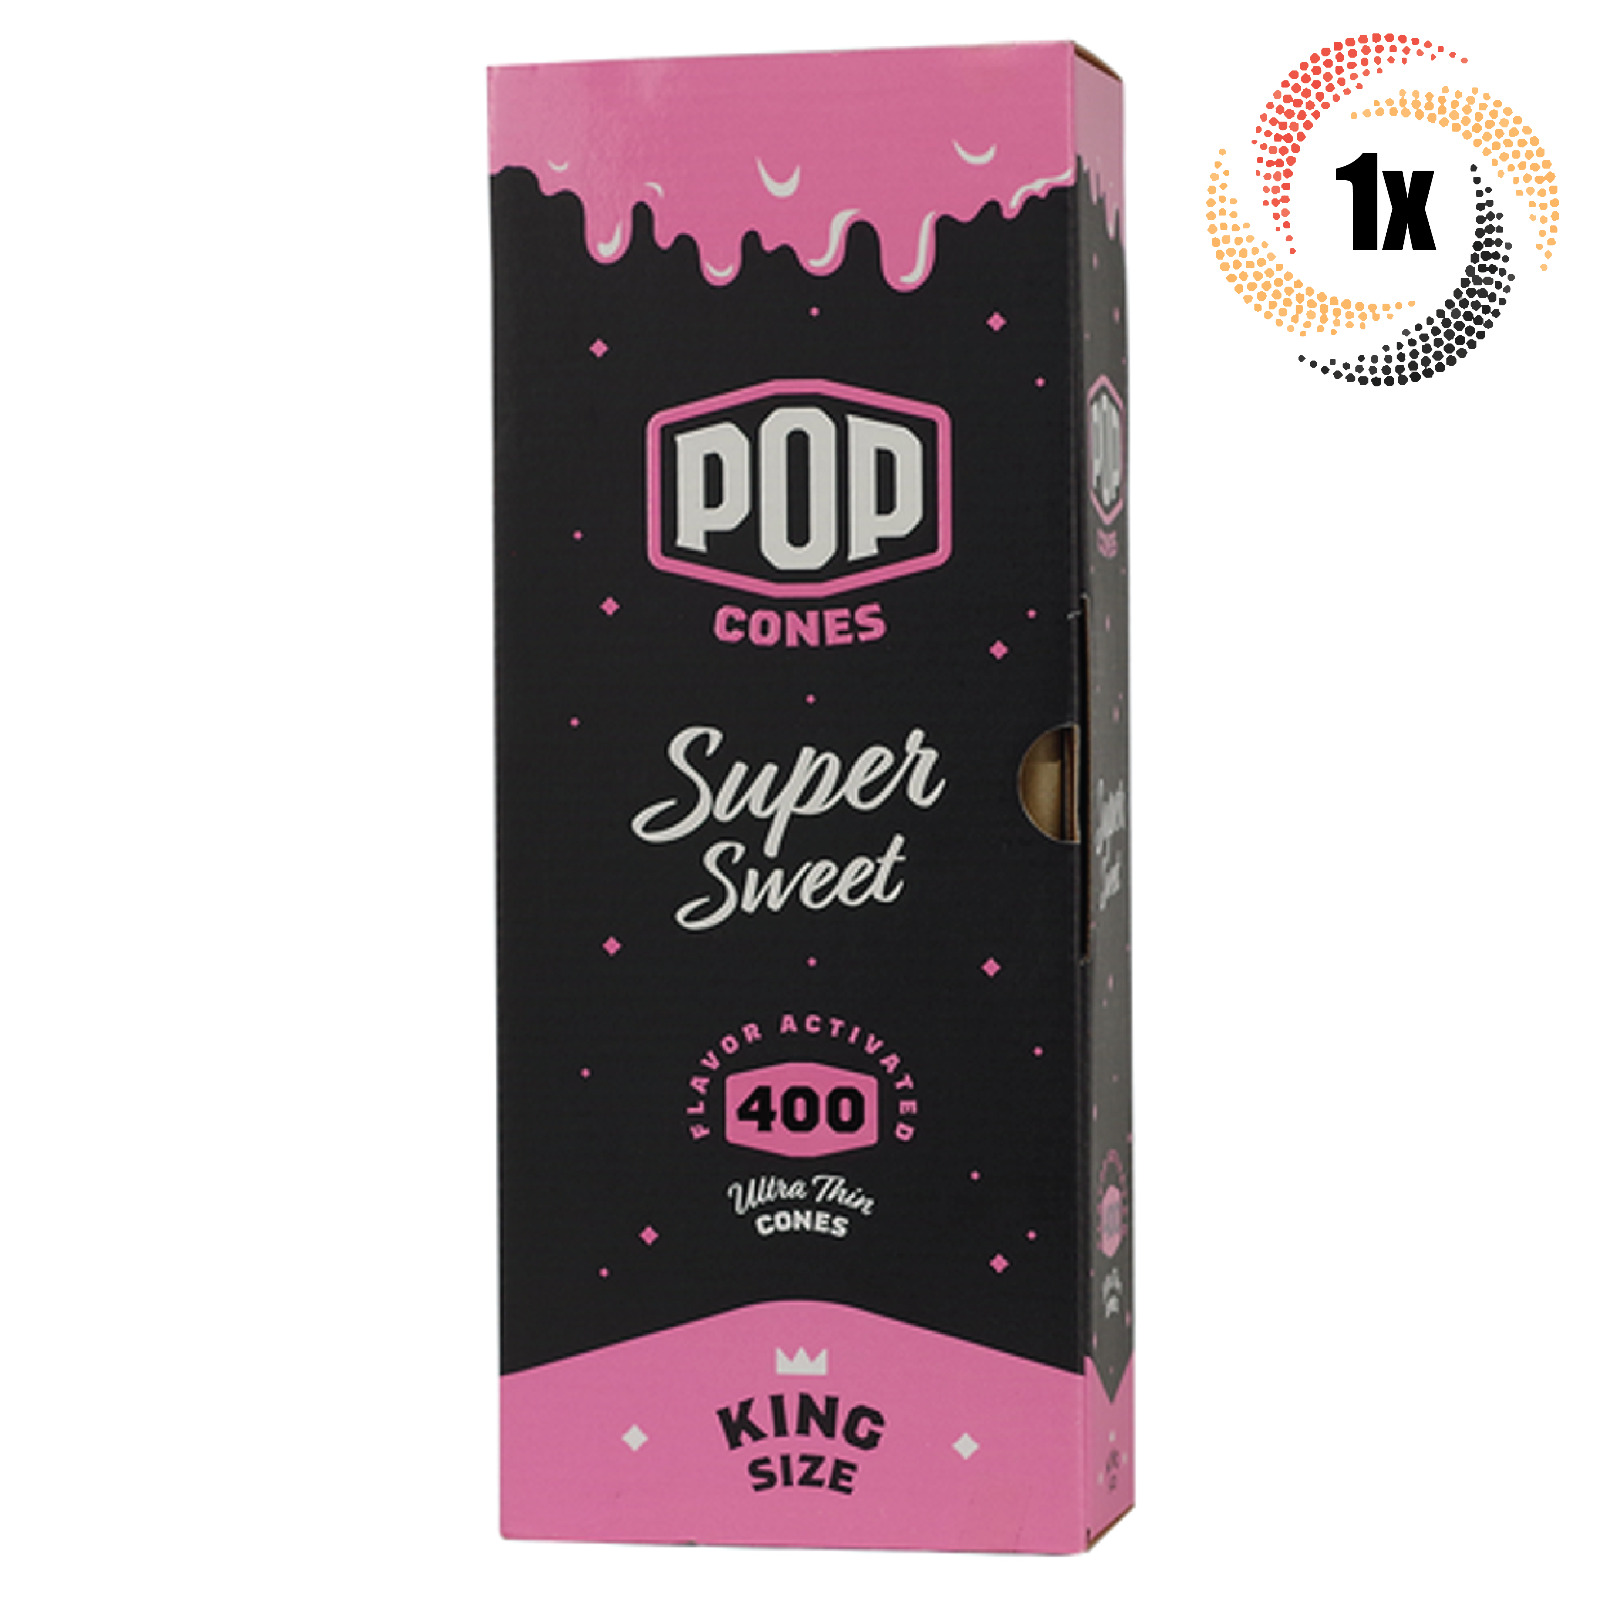 1x Box Pop Super Sweet Cones | 400 Cones Each | 1 1/4 | + 2 Free Tubes